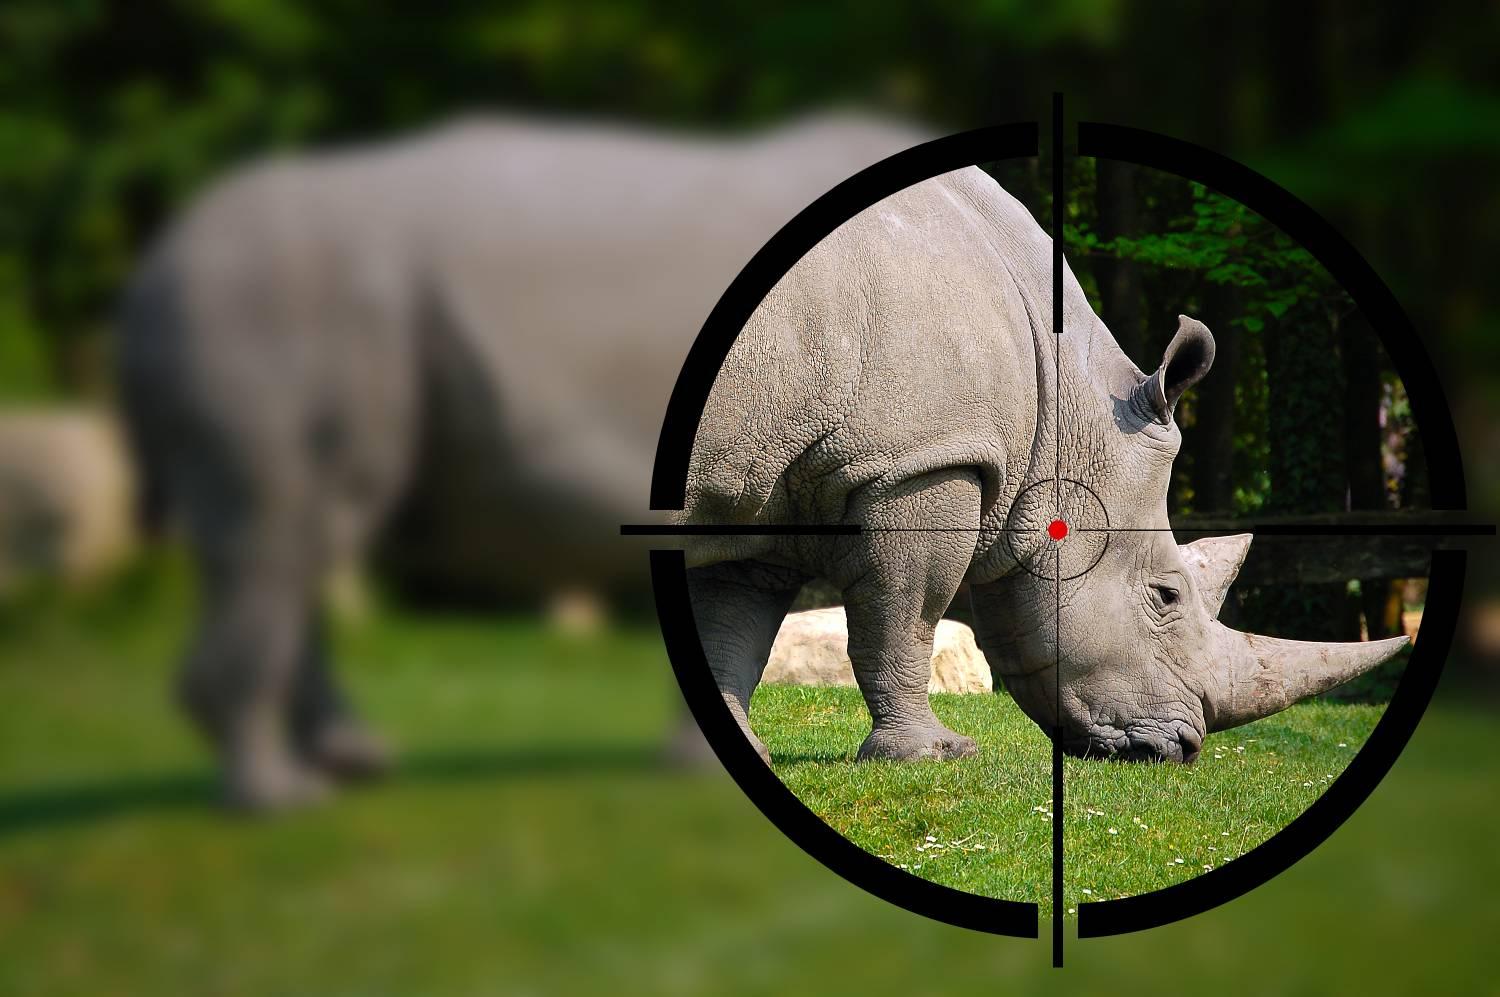 Big game hunting -- White rhino in the rifle sight